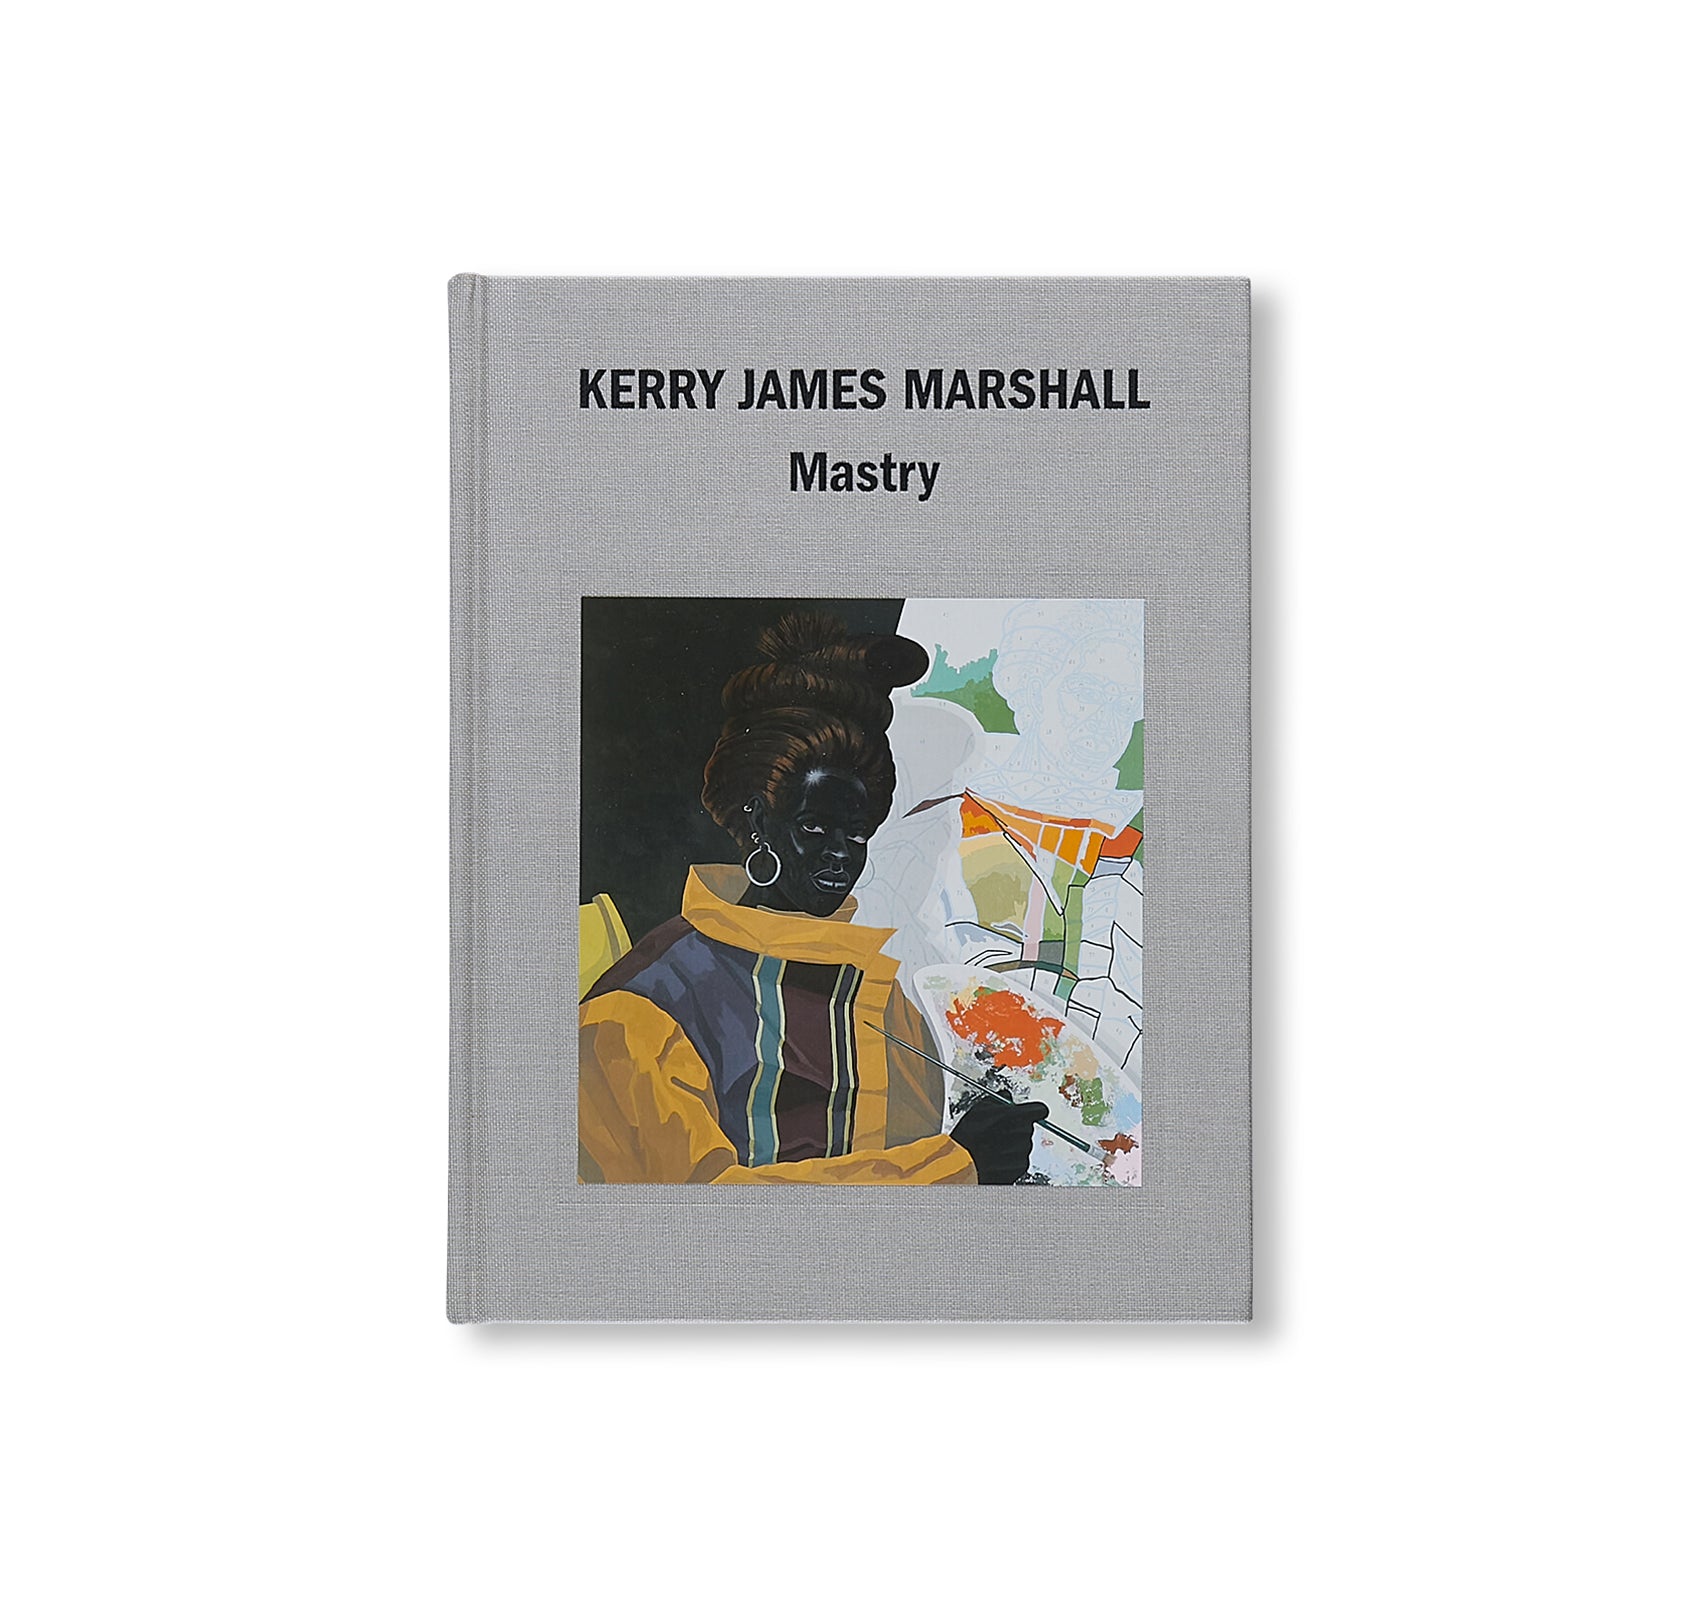 MASTRY by Kerry James Marshall